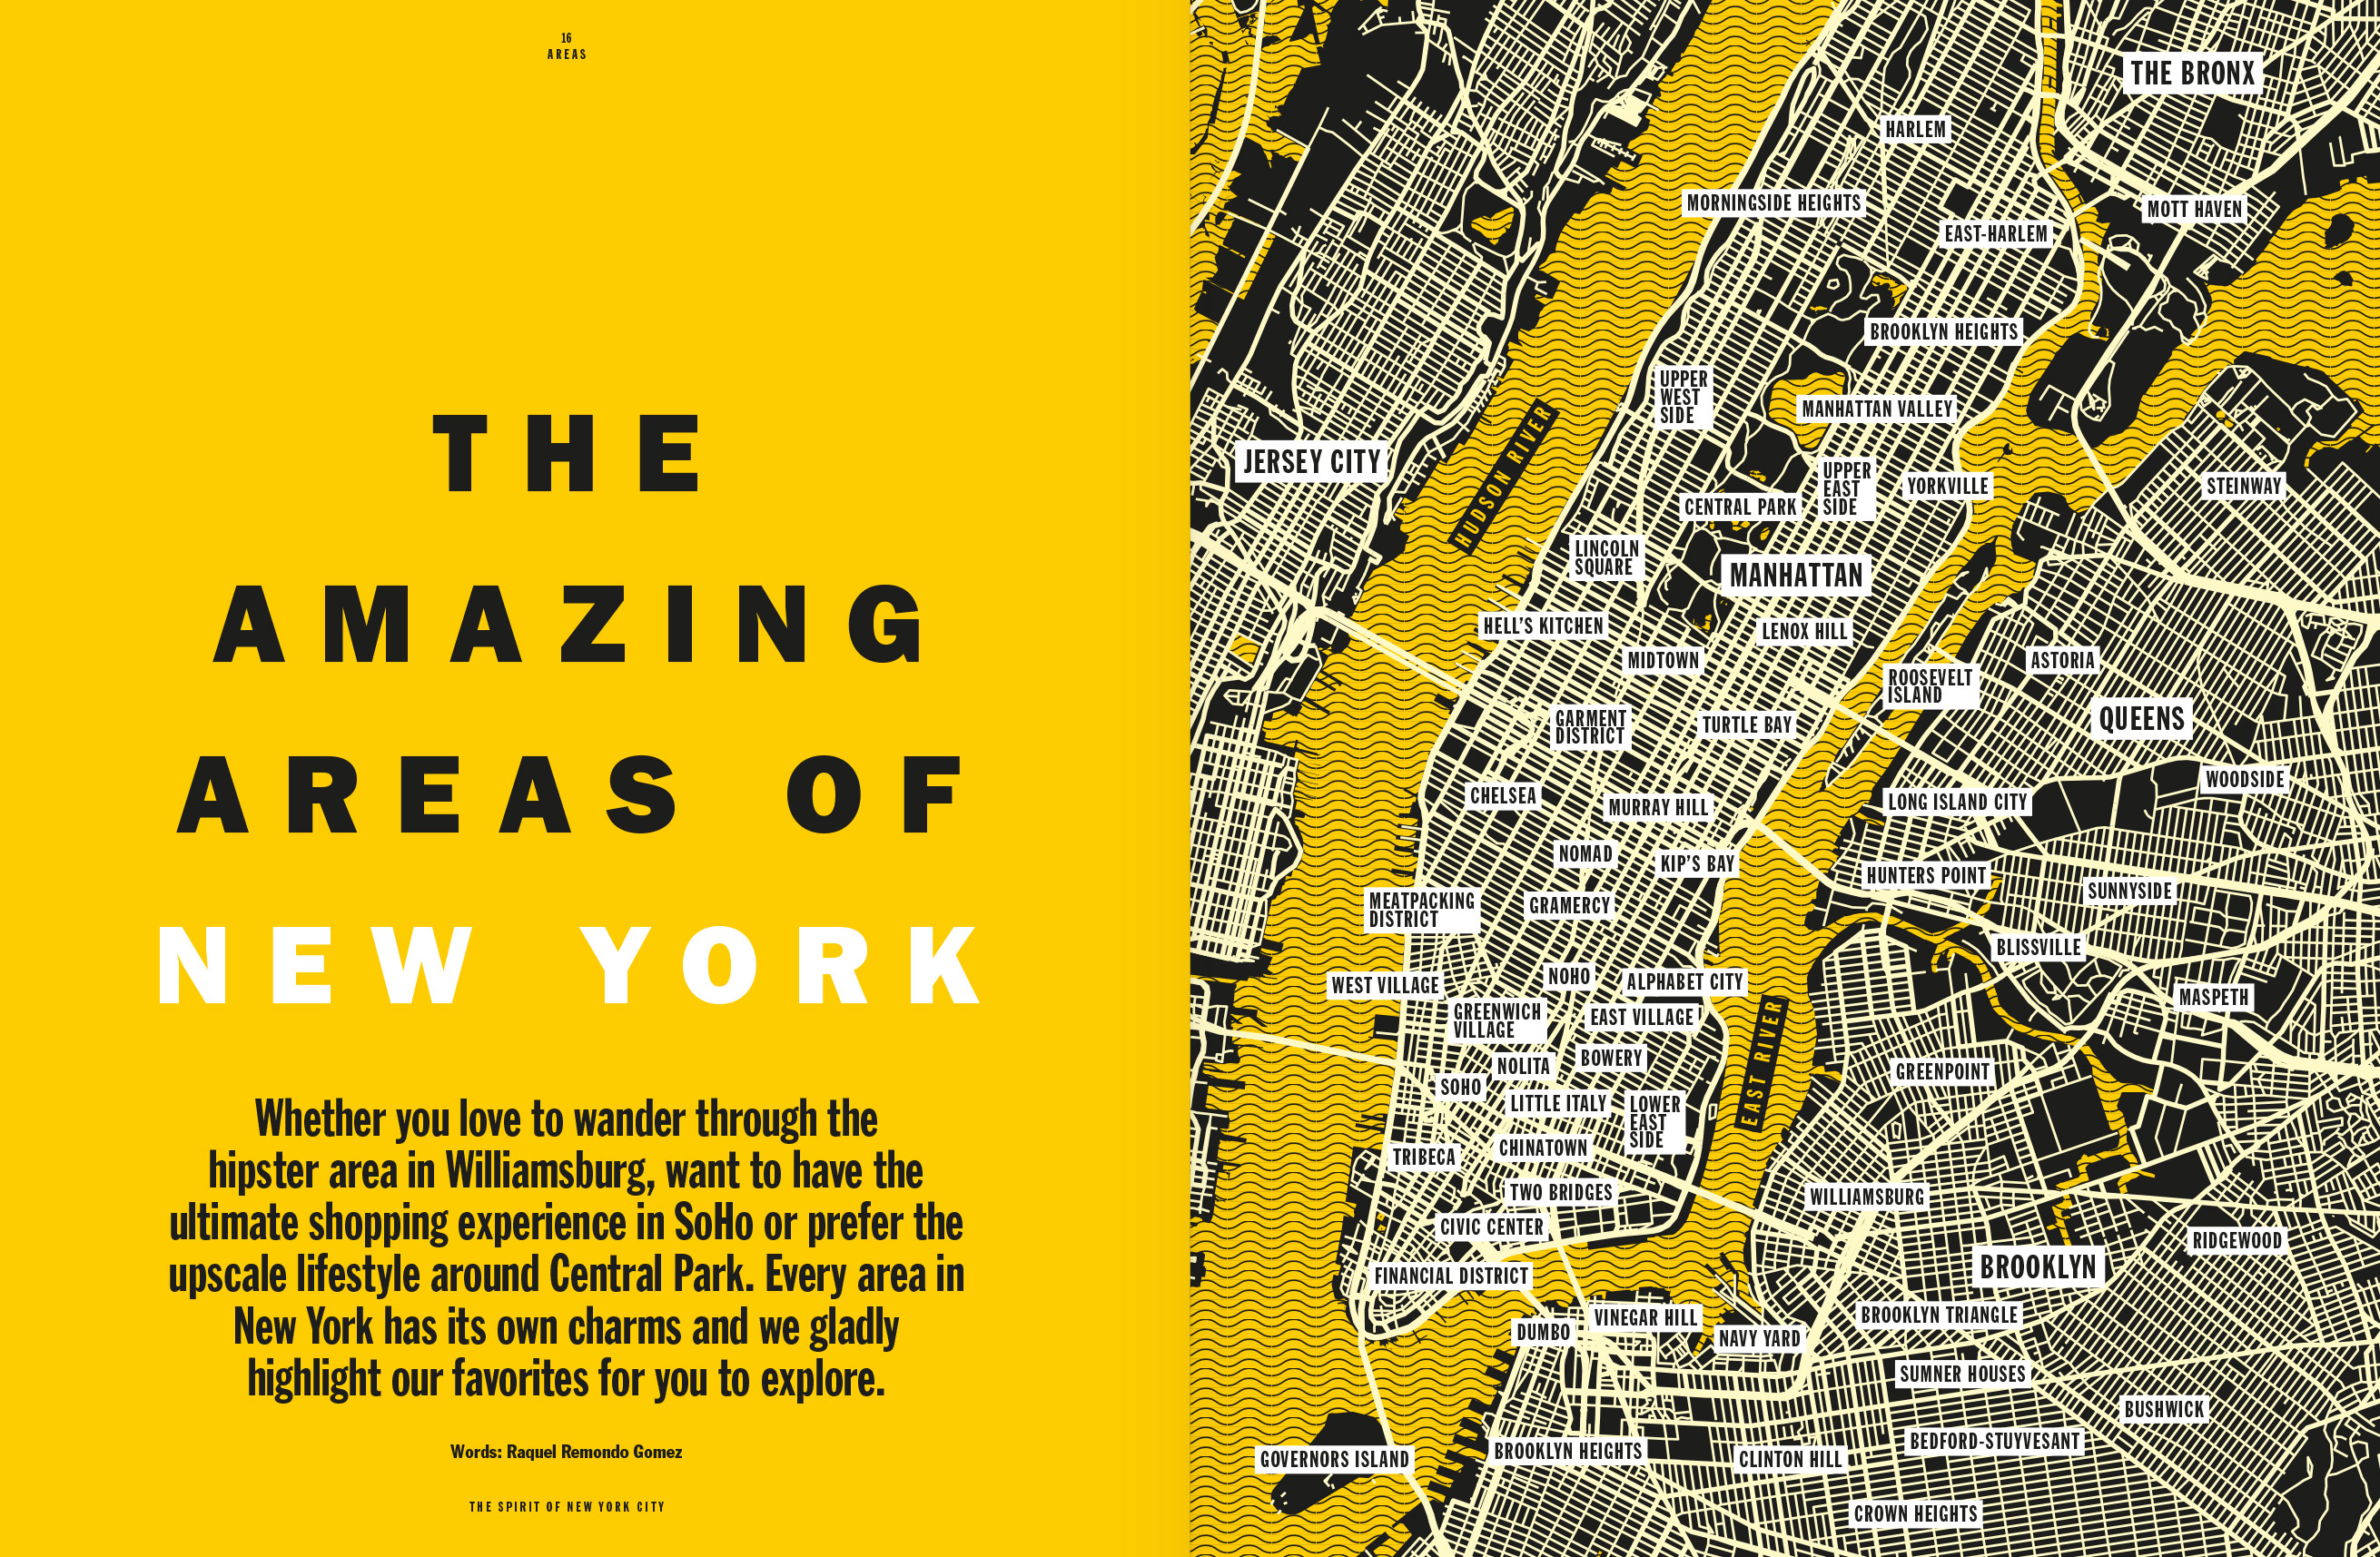 The spirit of new york city, magazine, editorial design